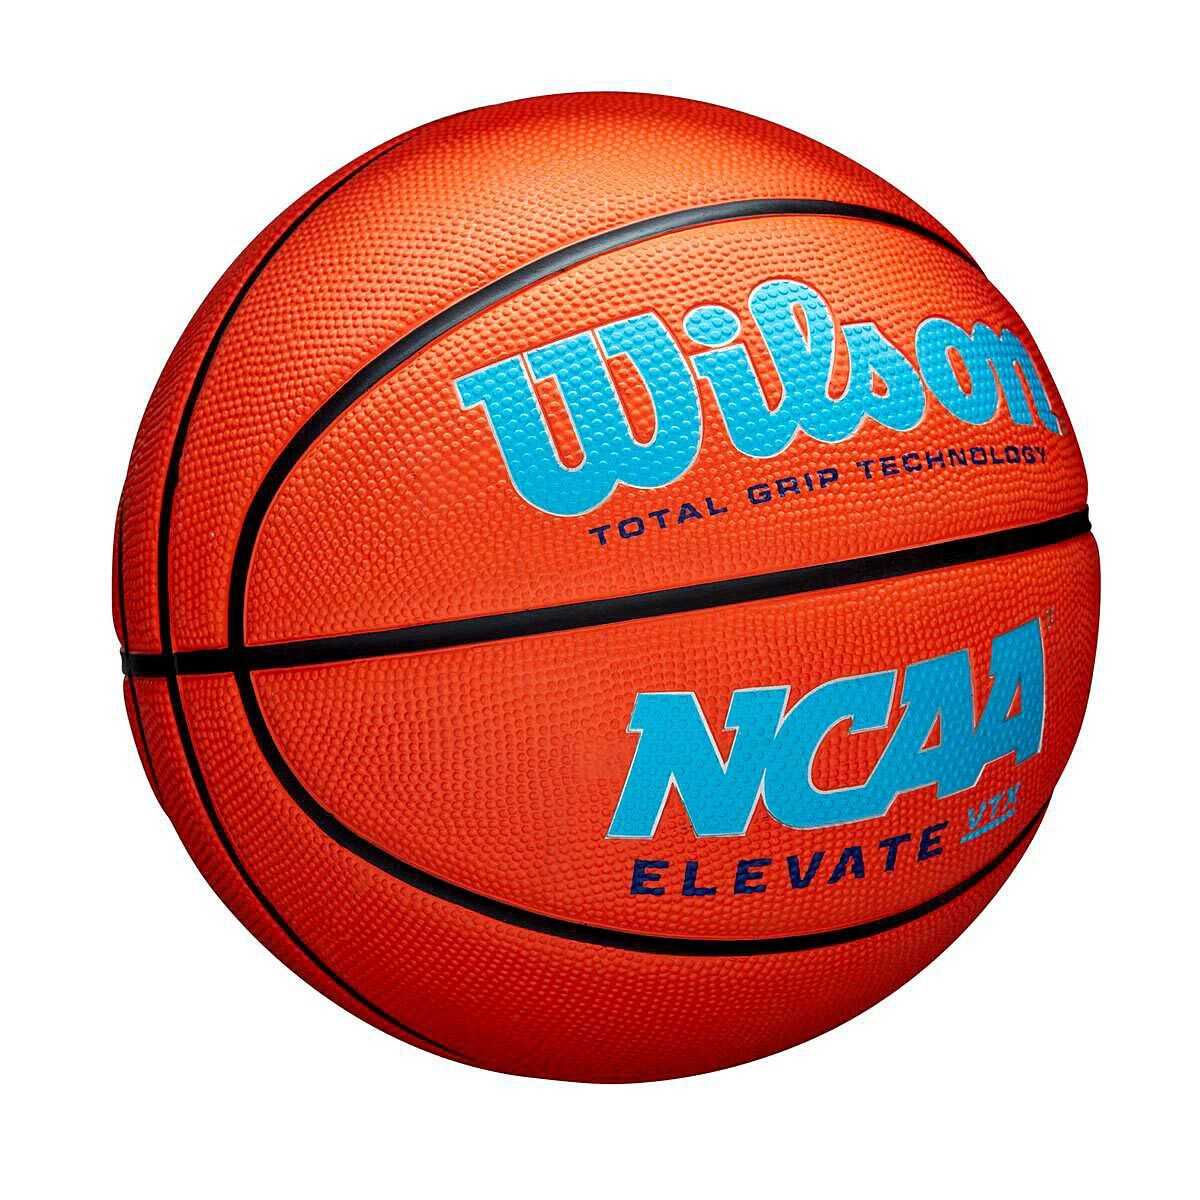 Wilson NCAA Elevate VXT krepšinio kamuolys, 7 